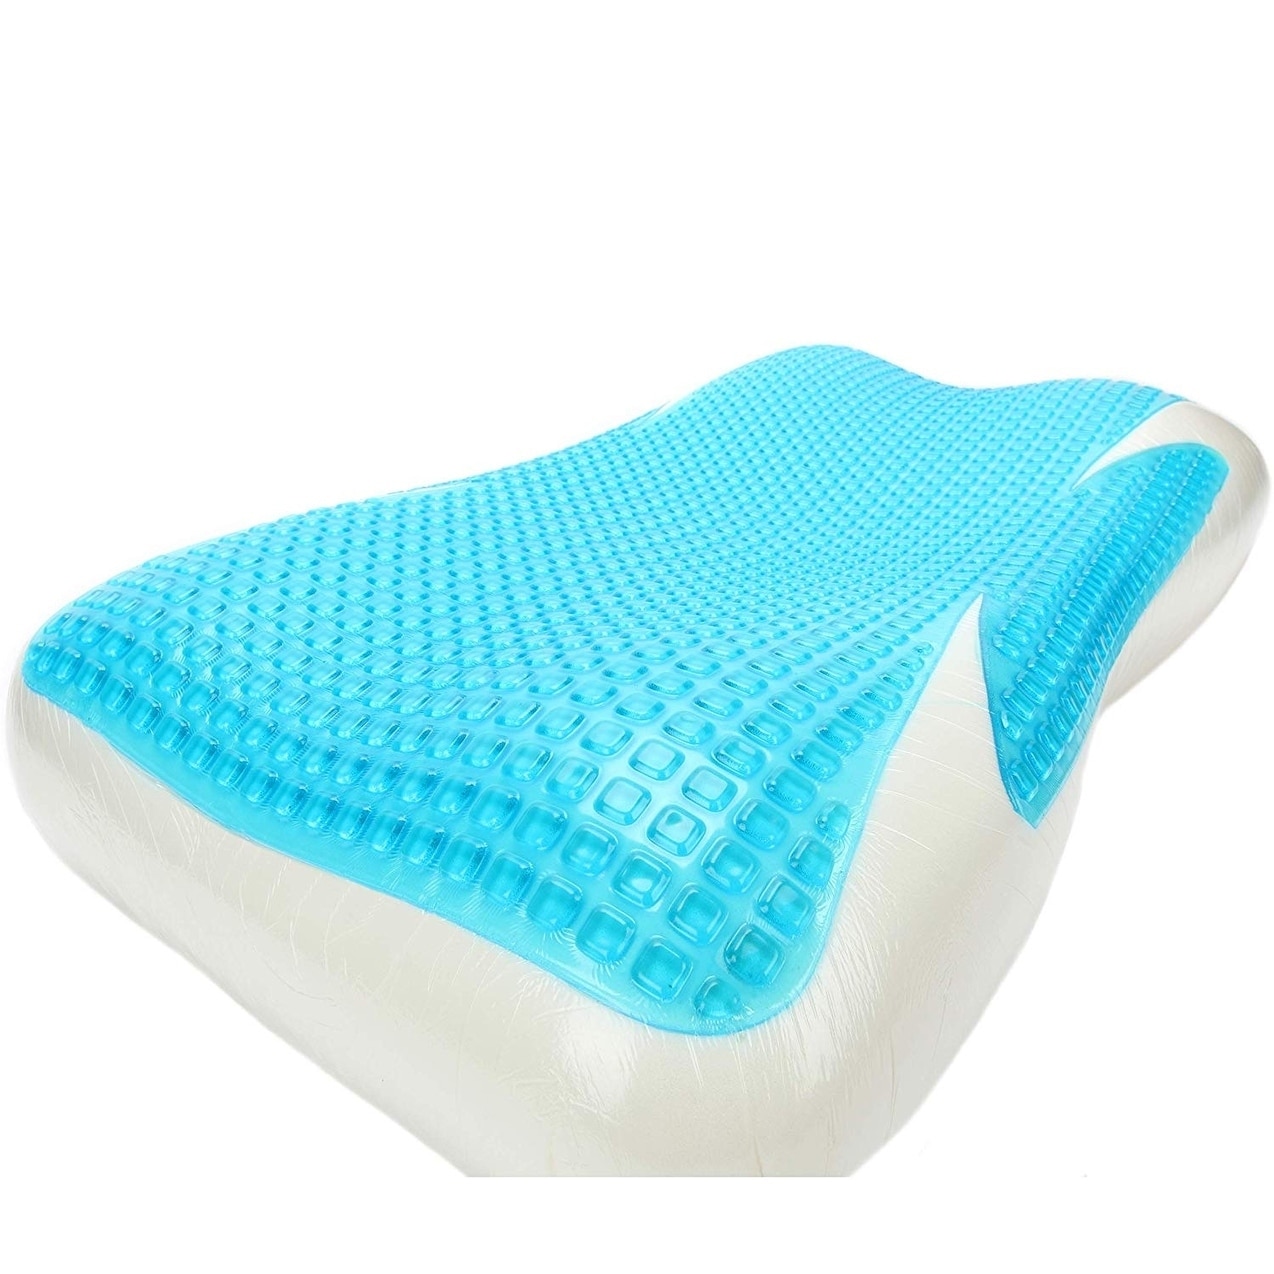 Mount-It! Premium Comfort Seat Cushion Memory Foam - Bed Bath & Beyond -  30639586